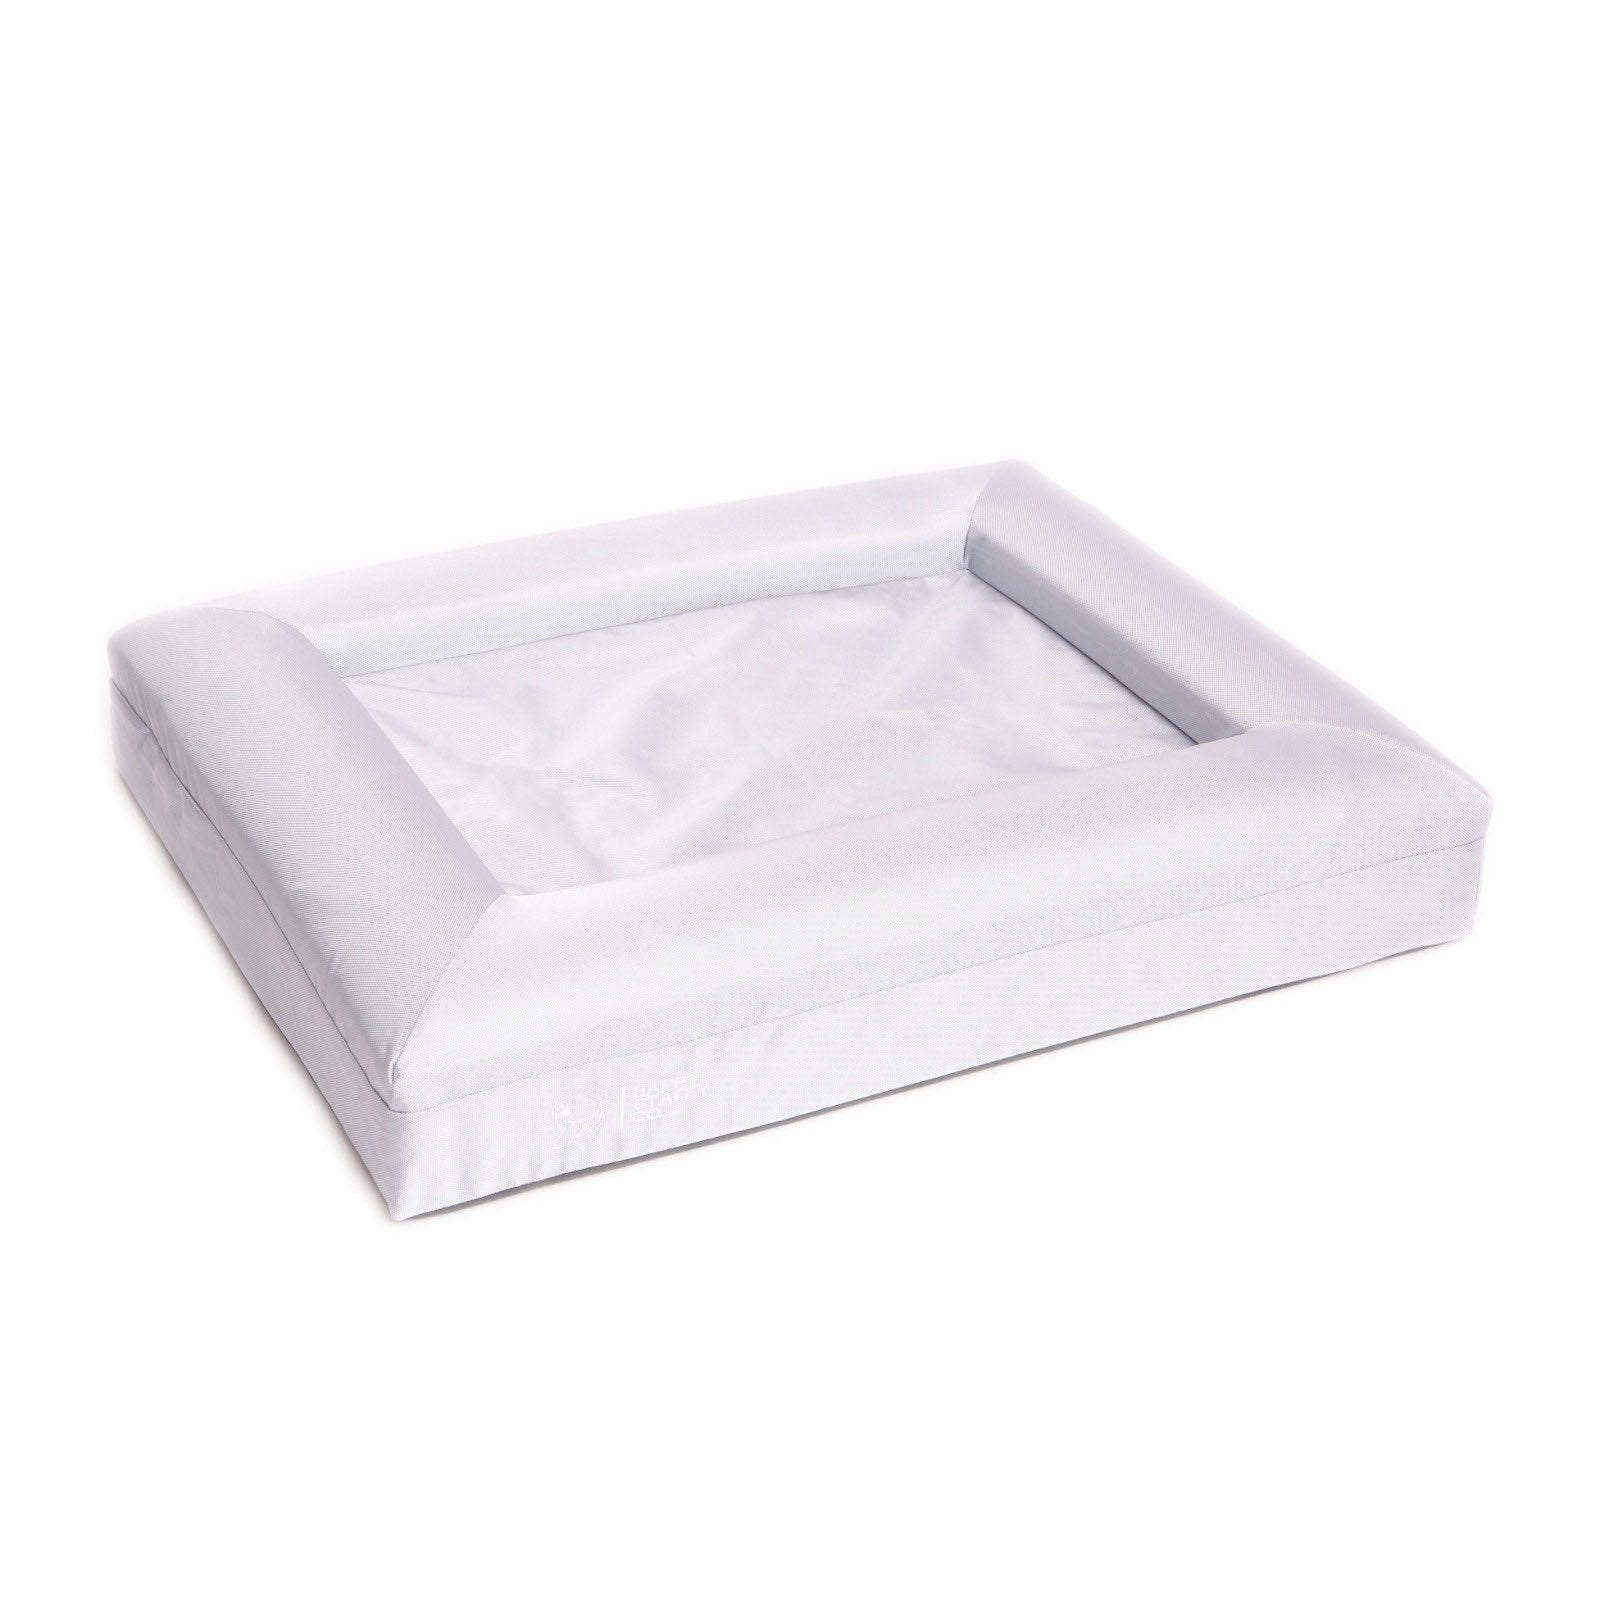 Orthopedic Memory Foam Bed + Chew Proof Cover Combo